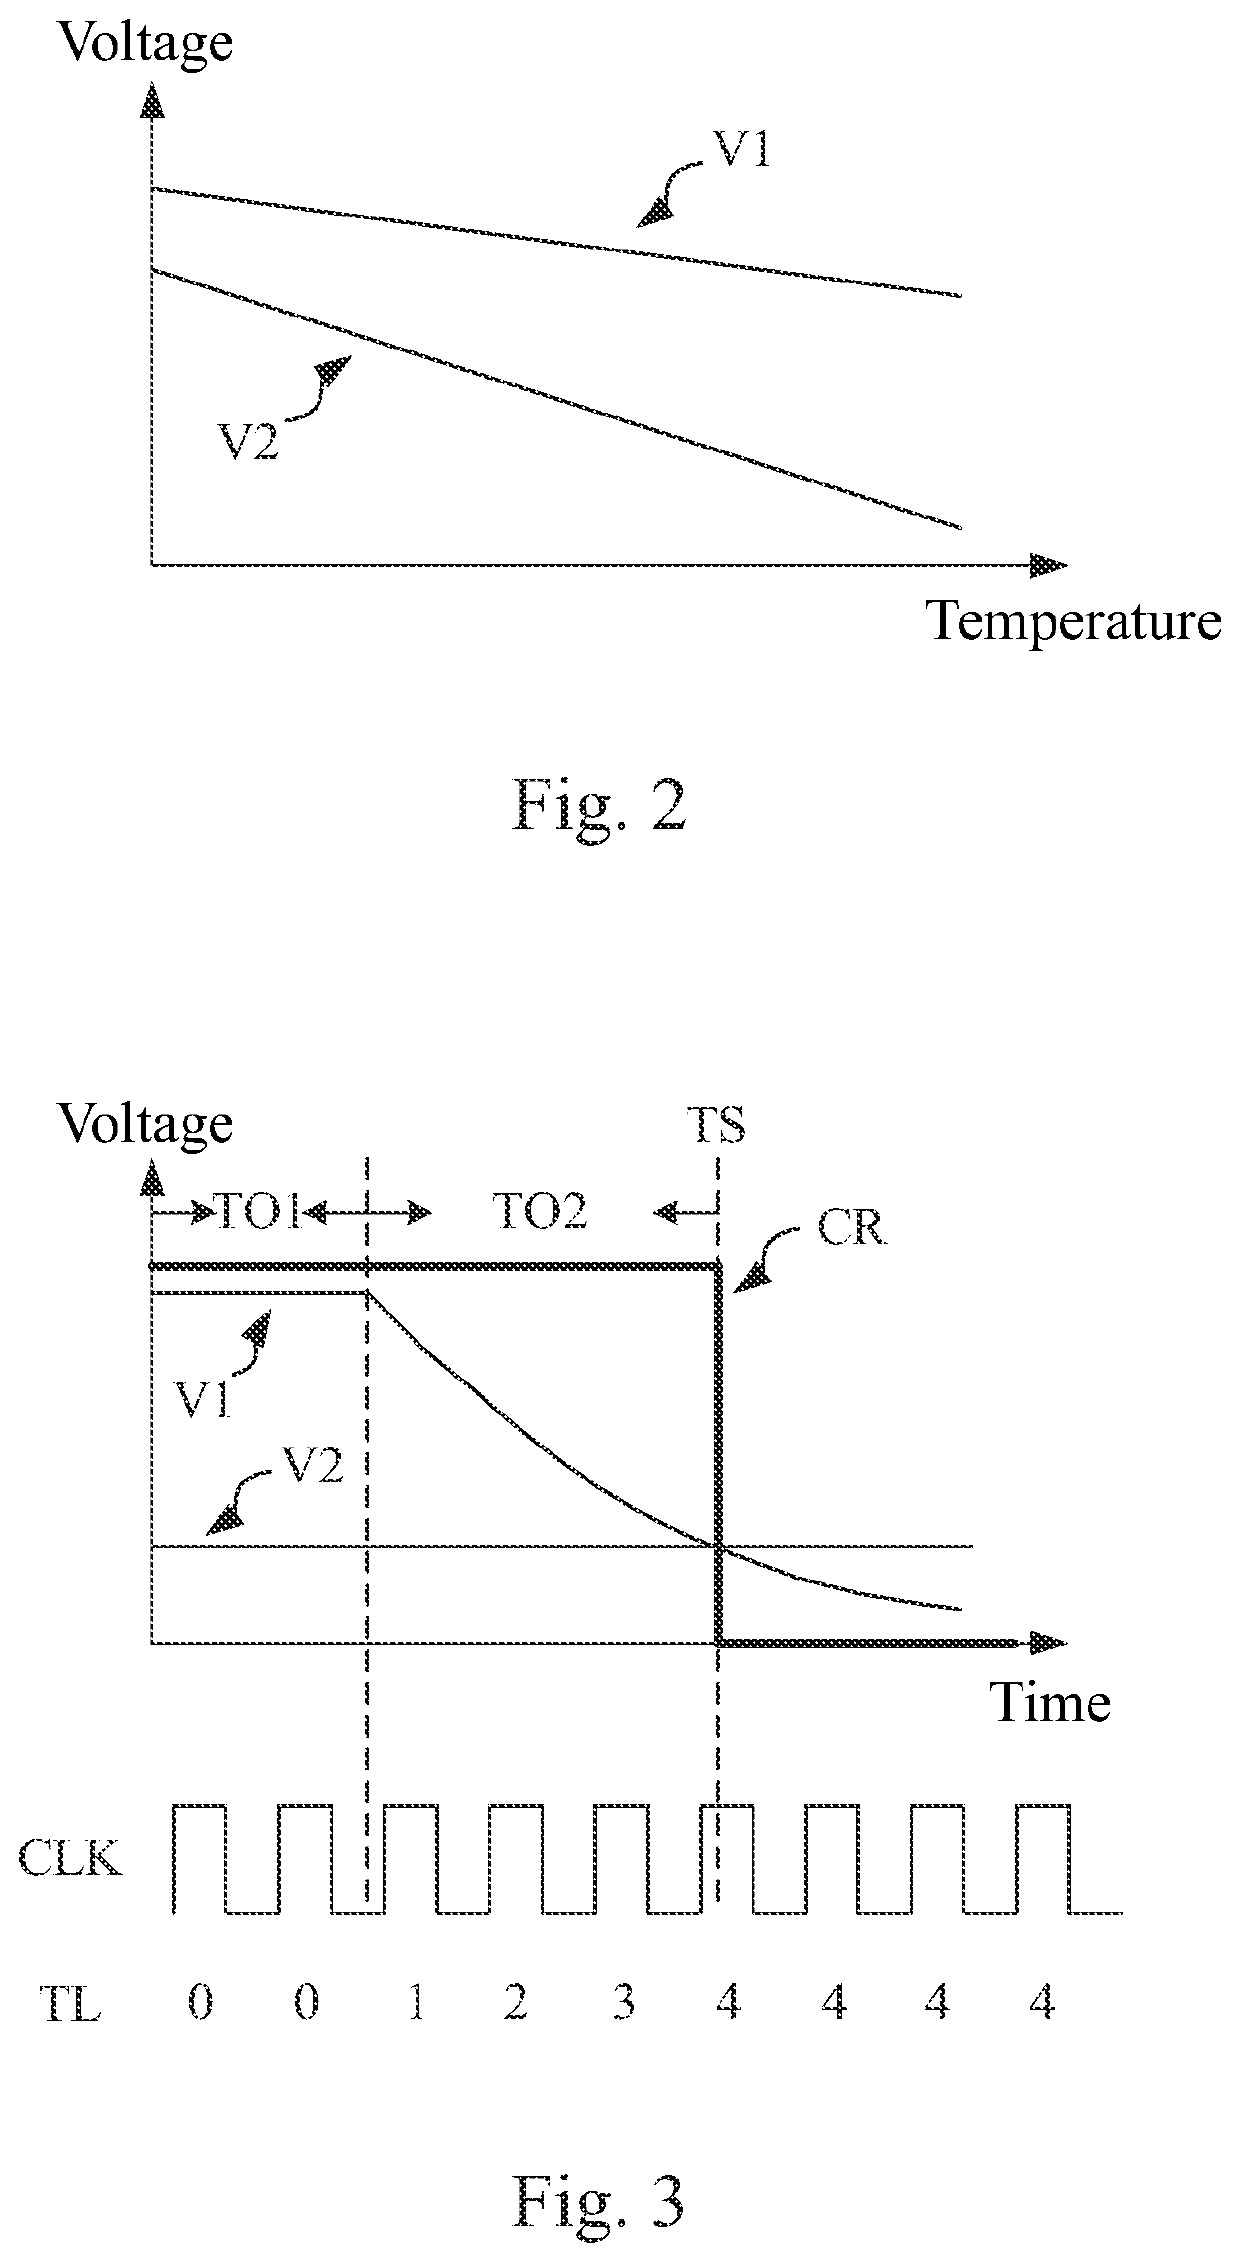 Temperature sensing circuit